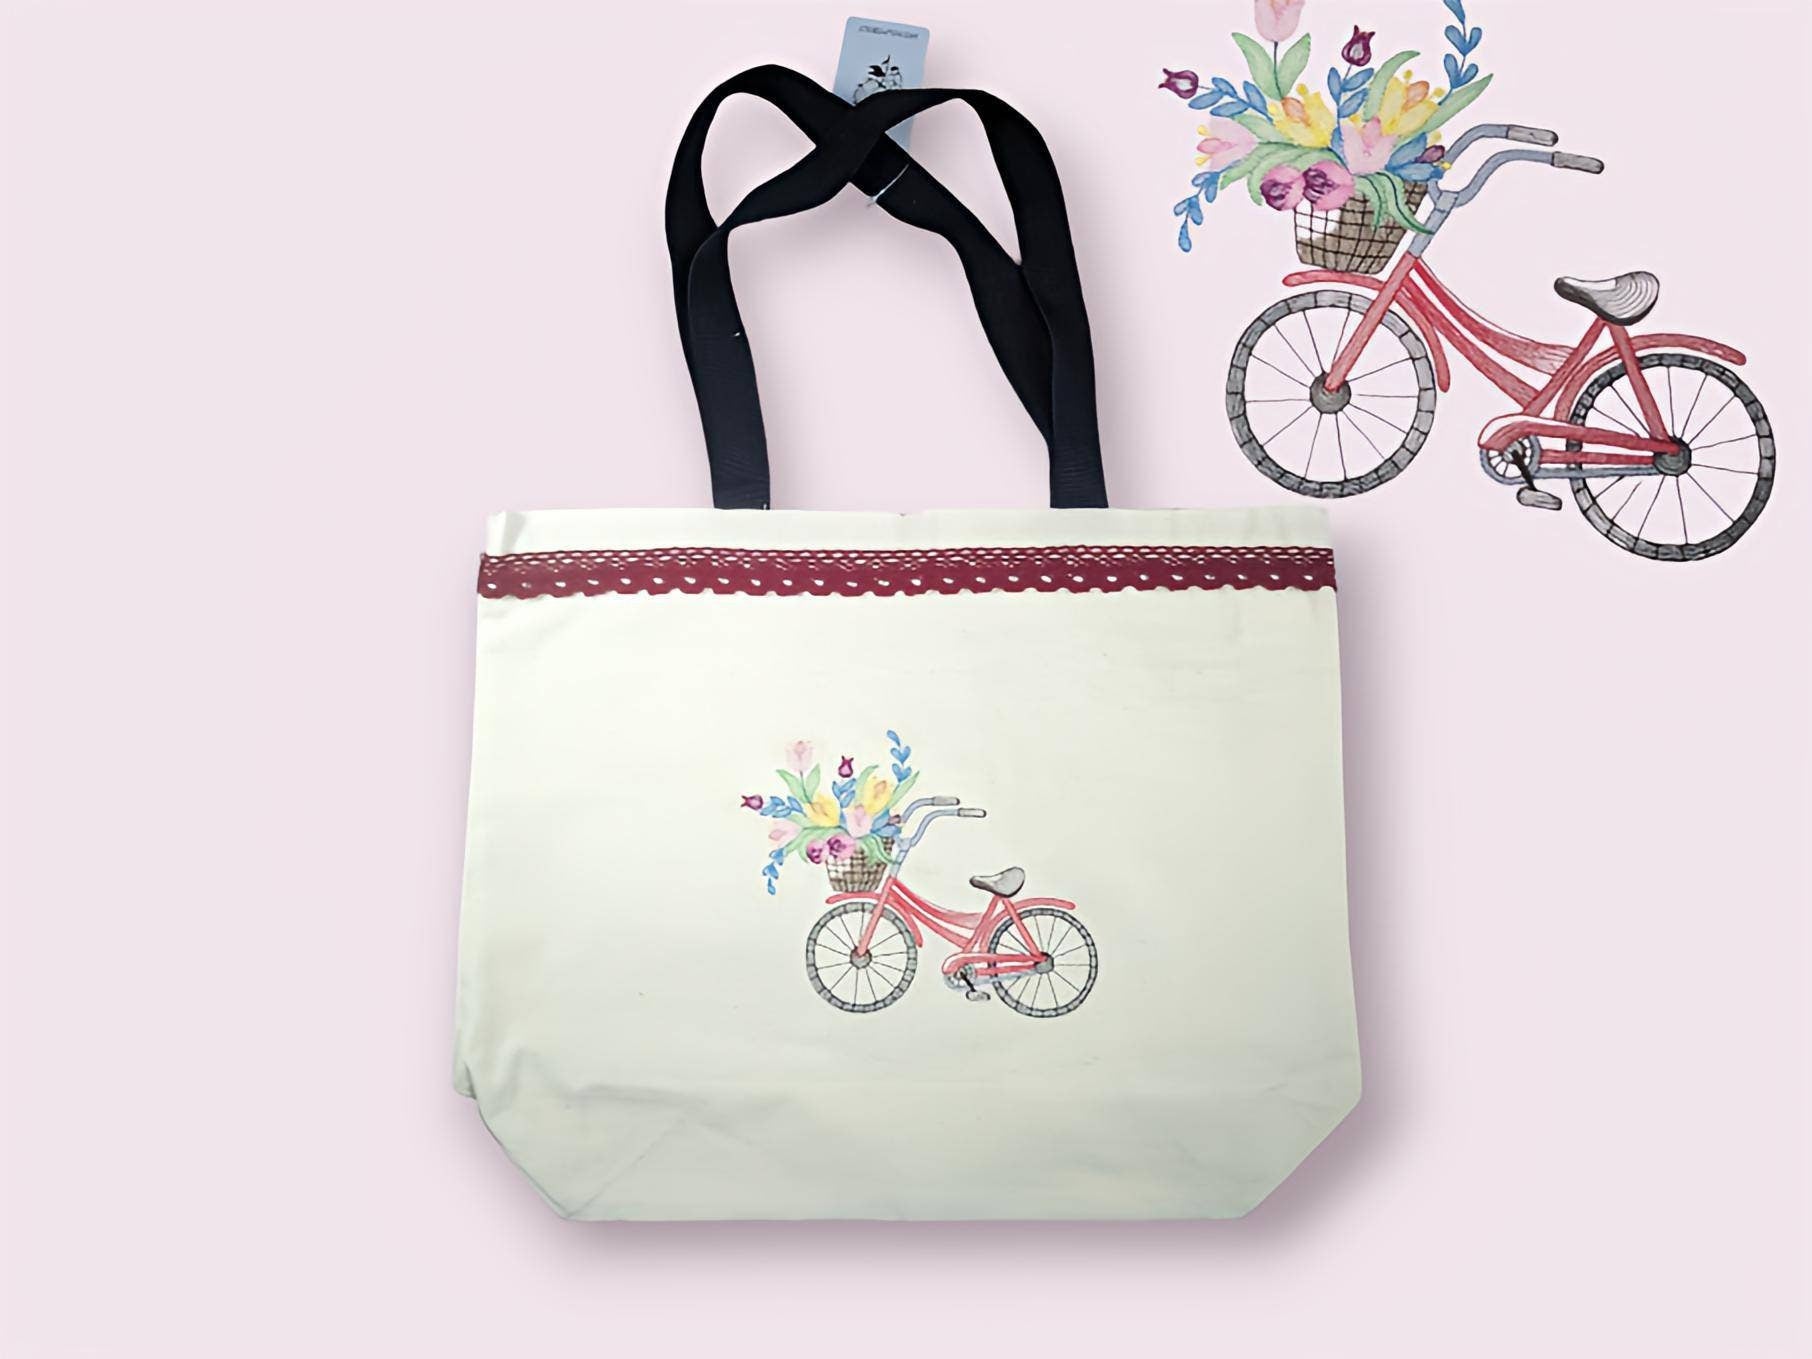 Embroidered tote bag, XL tote bag, spring tote bag, kawaii tote bag, spring flower tote bag, wild flower bag, bicycle bag, reusable tote bag